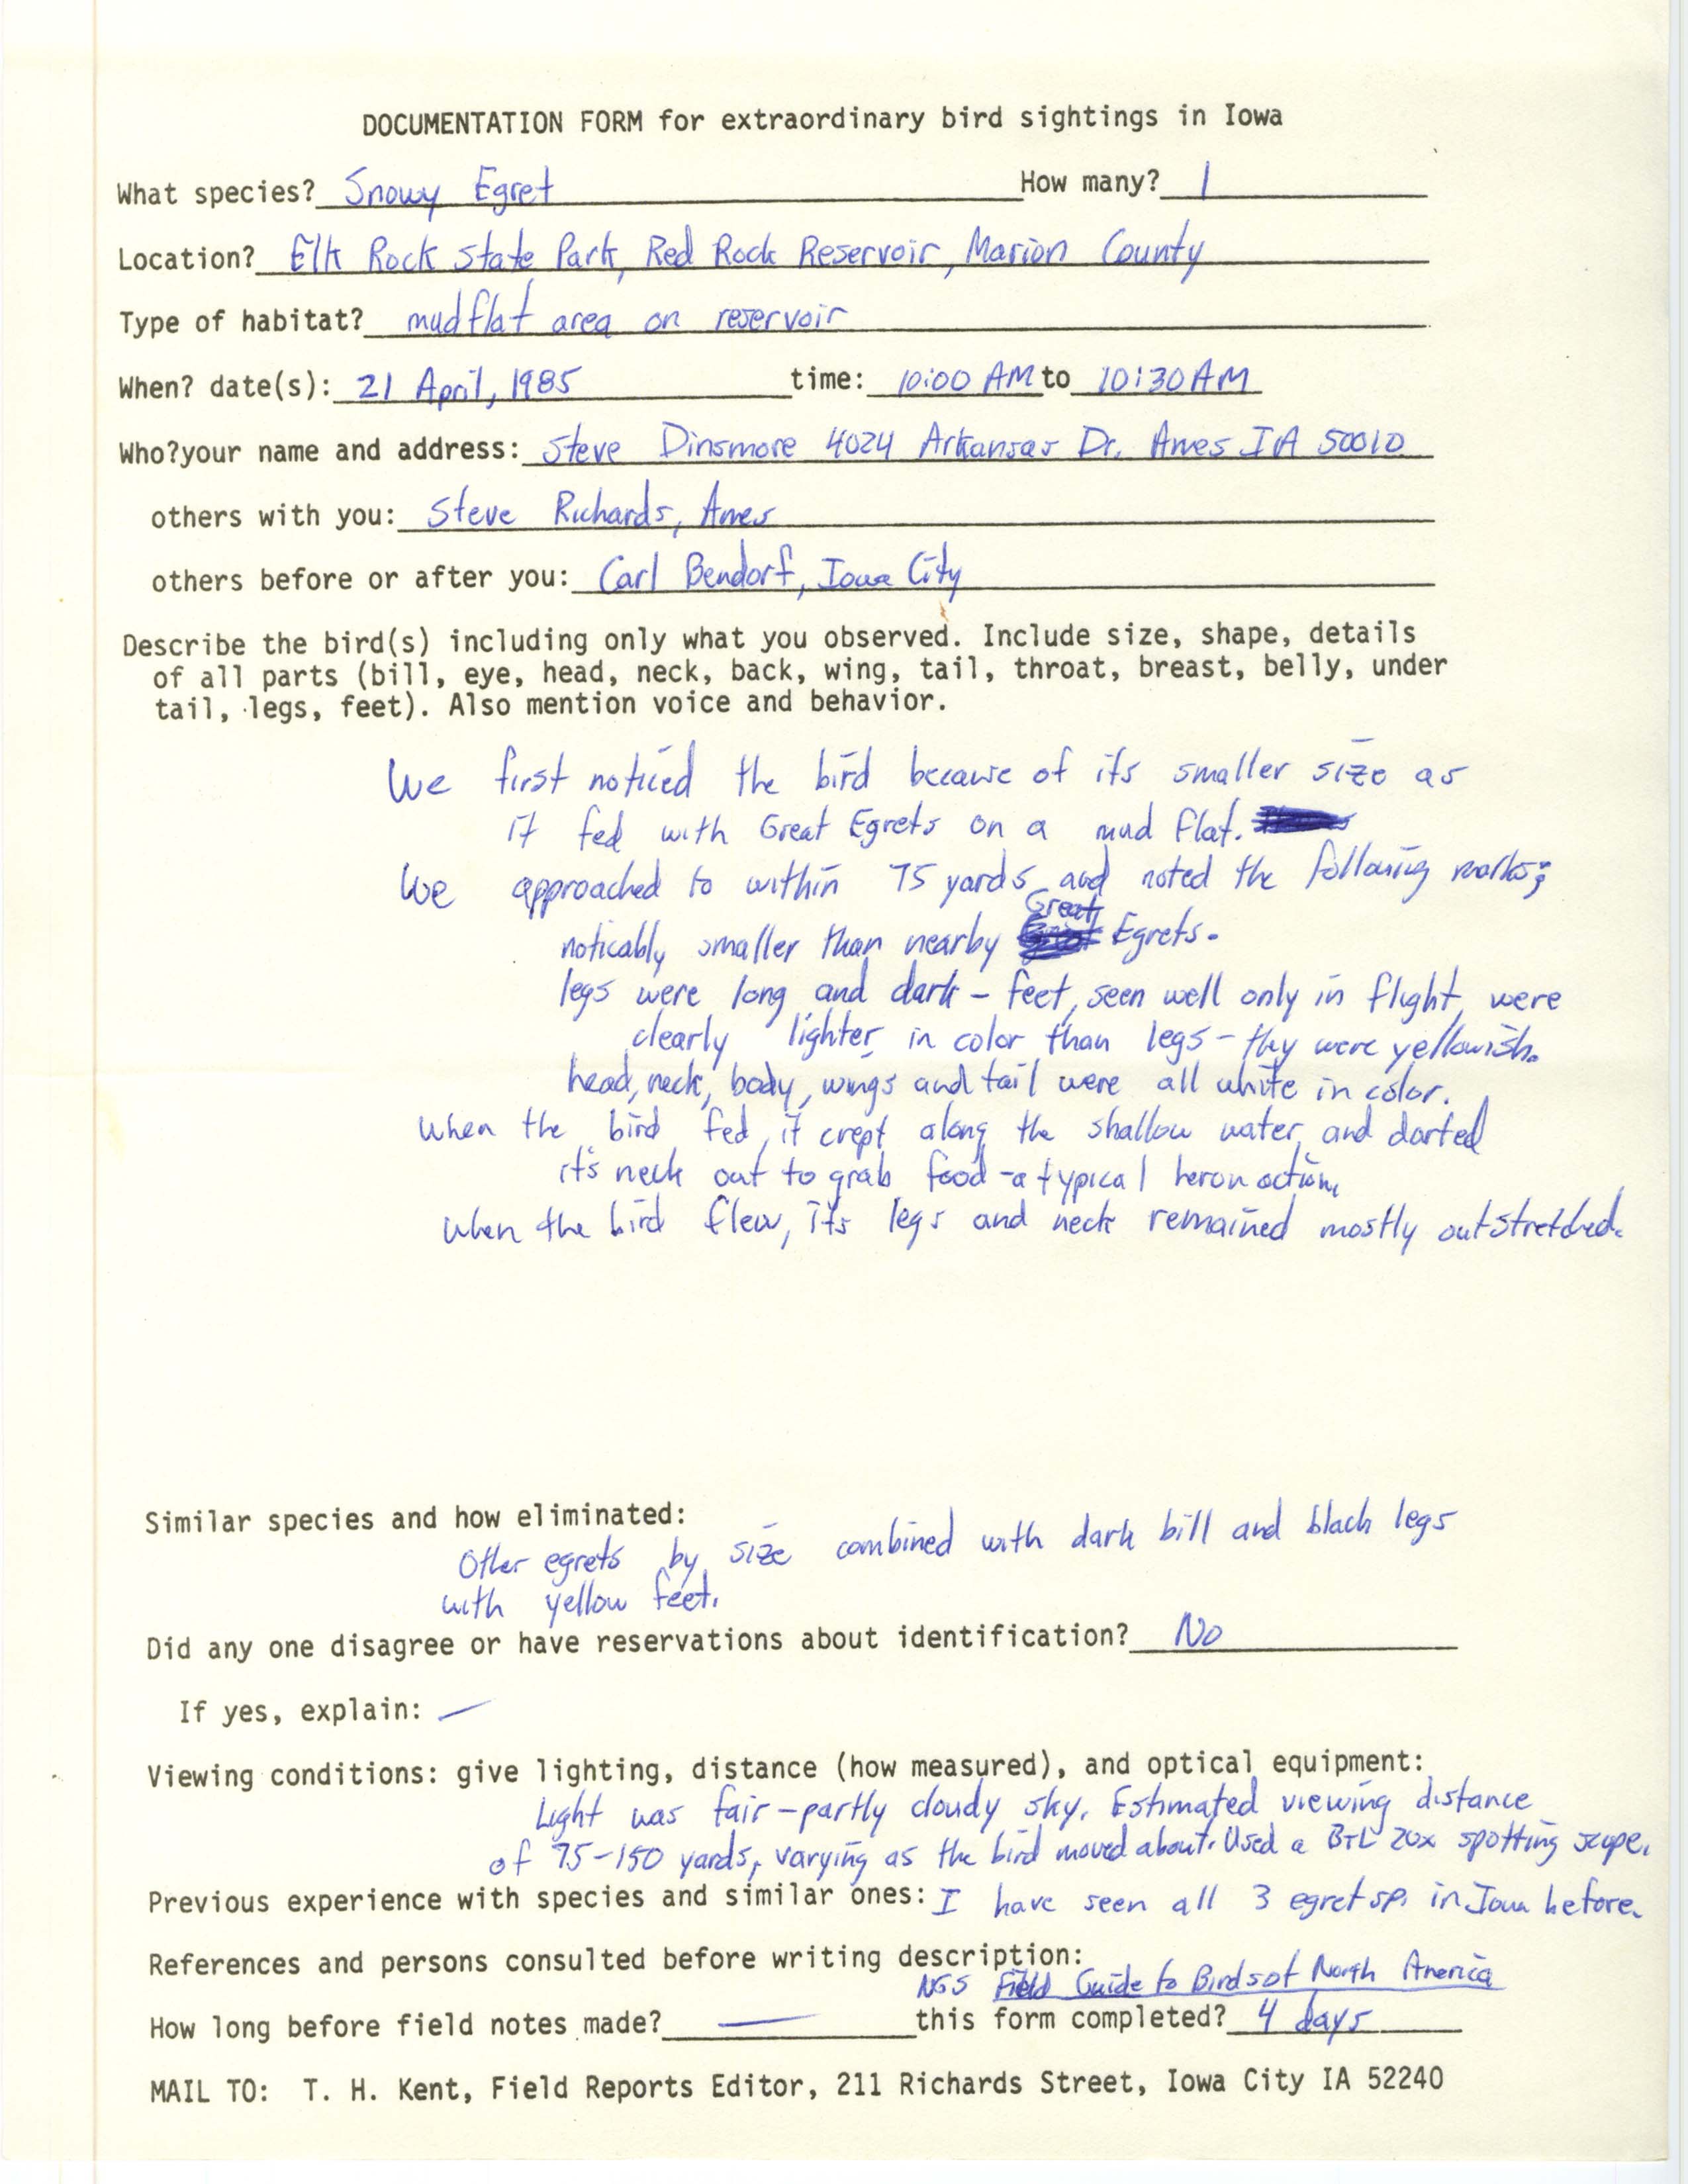 Rare bird documentation form for Snowy Egret at Elk Rock State Park, 1985